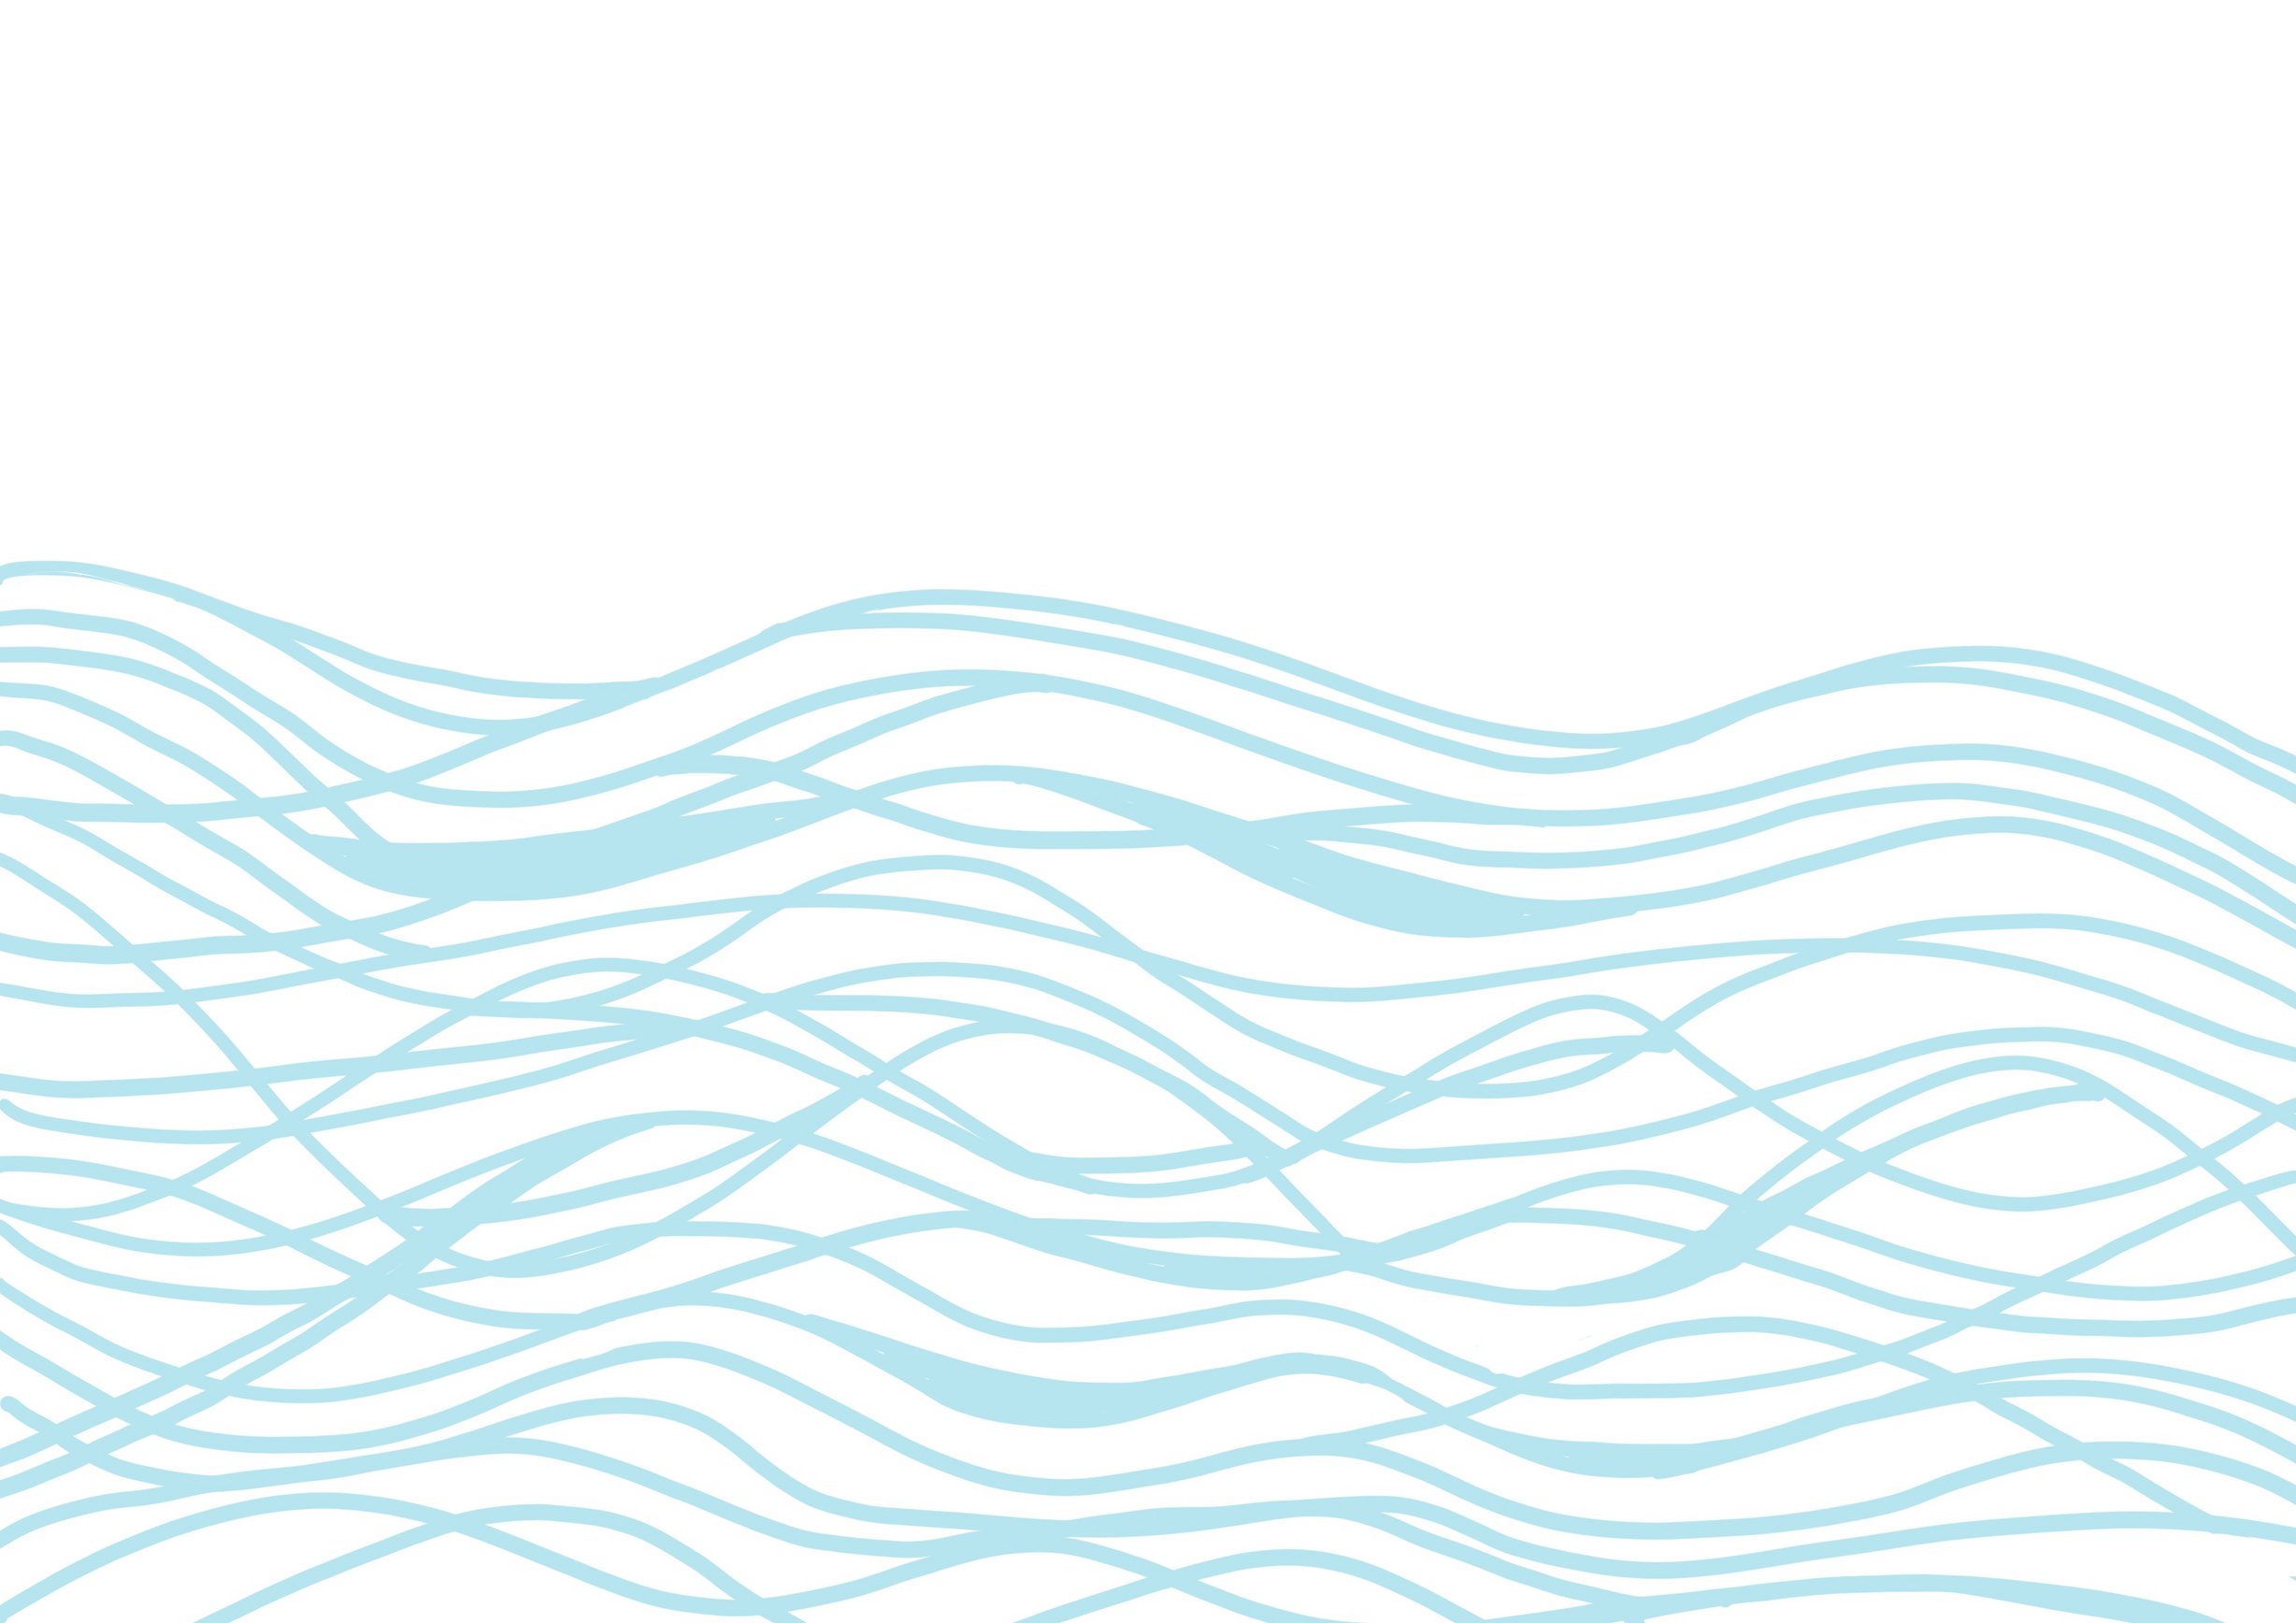 Waves Image